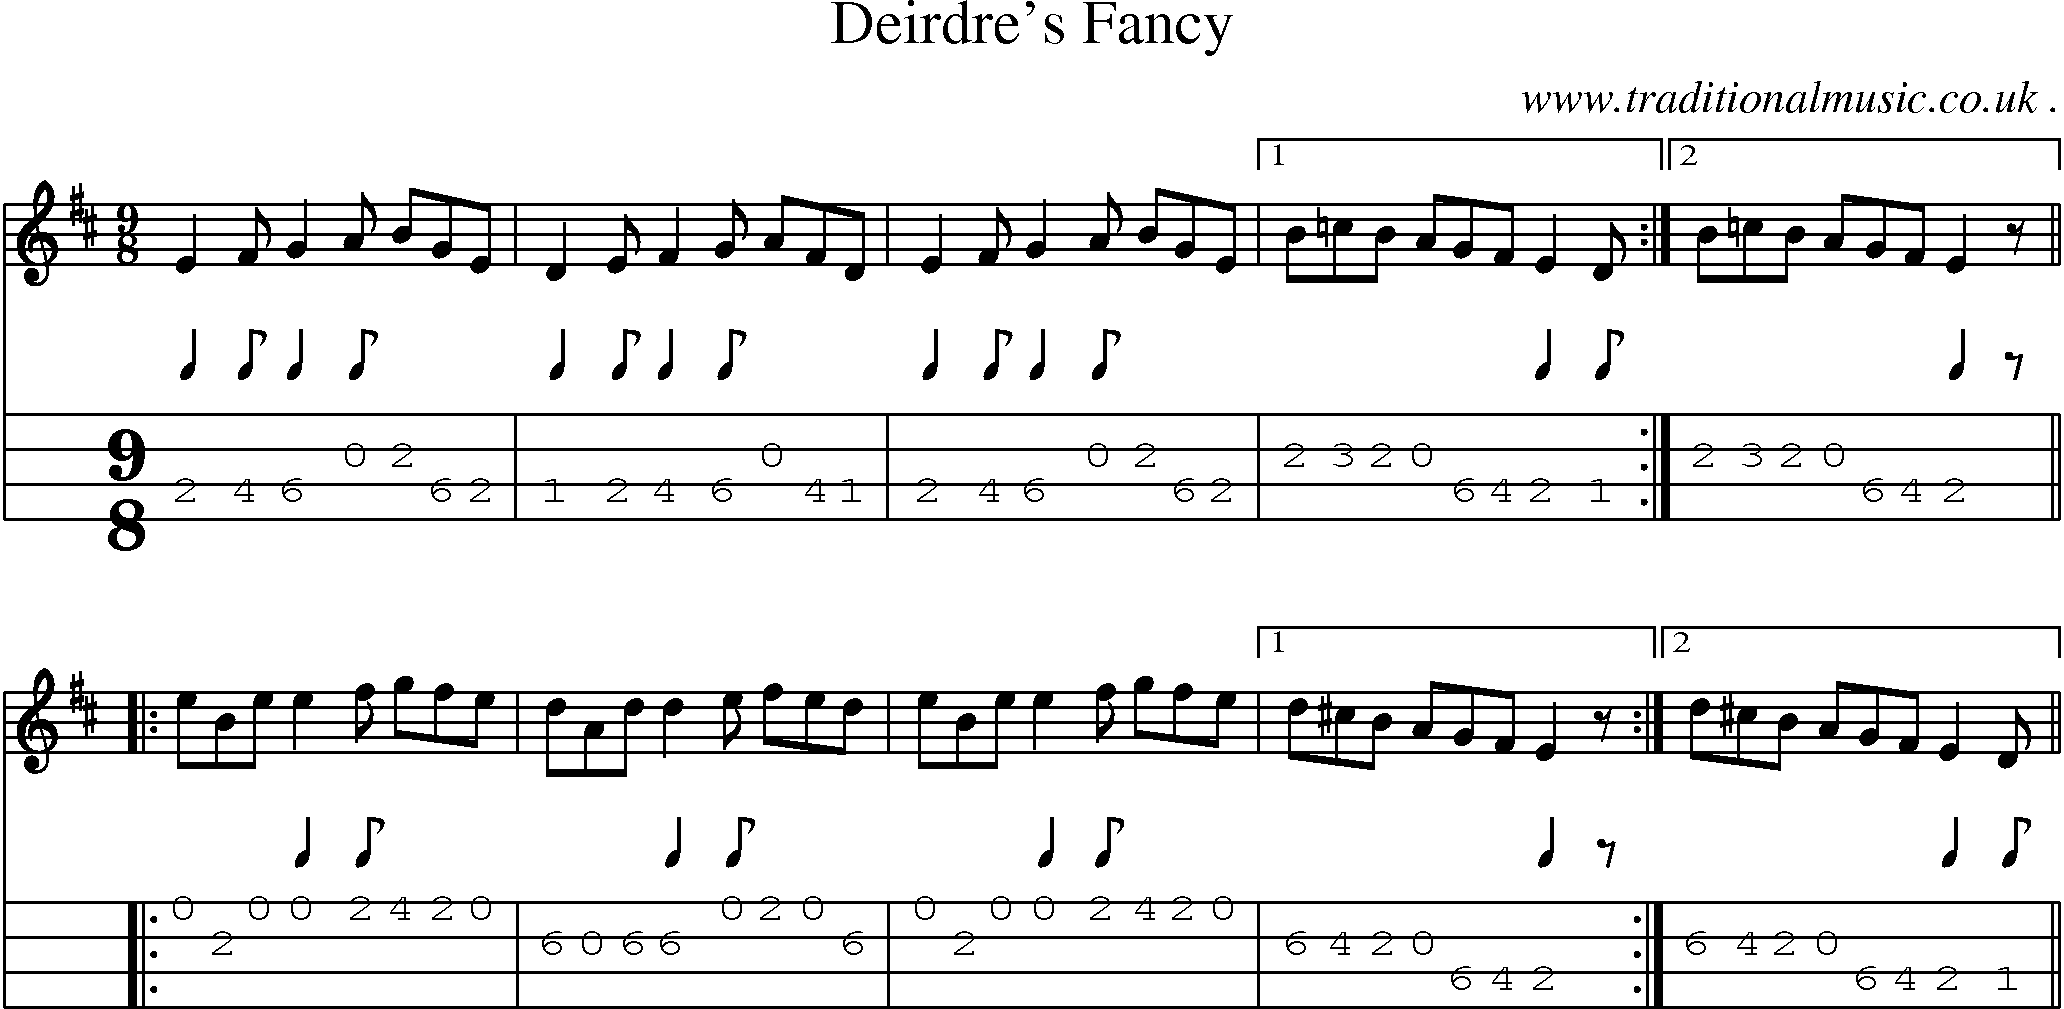 Sheet-Music and Mandolin Tabs for Deirdres Fancy